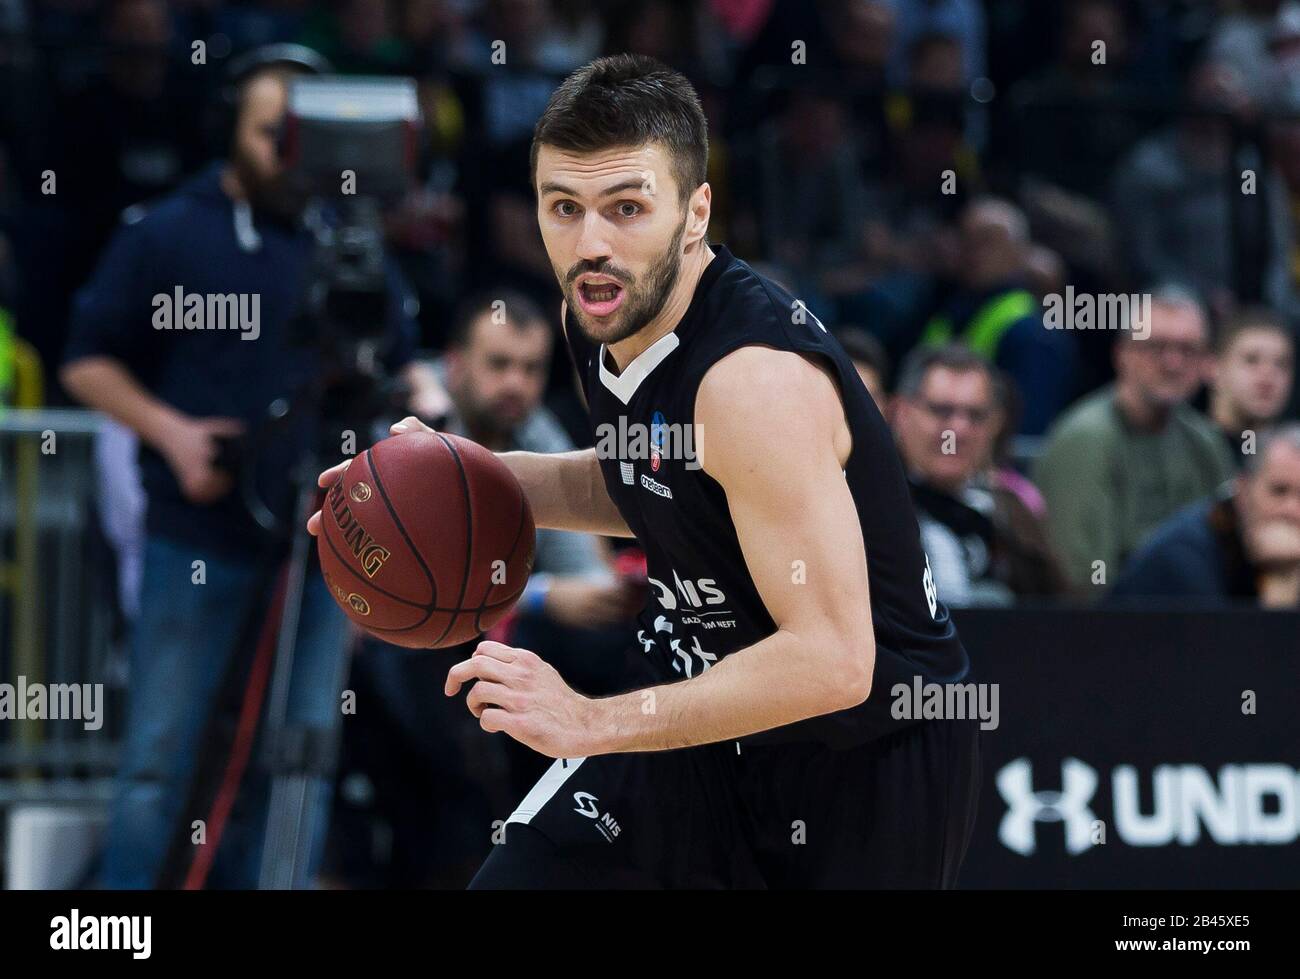 Belgrado, Serbia. 4th Mar, 2020. Nemanja Gordic di KK Partizan guida al cesto. Credito: Nikola Krstic/Alamy Live News Foto Stock